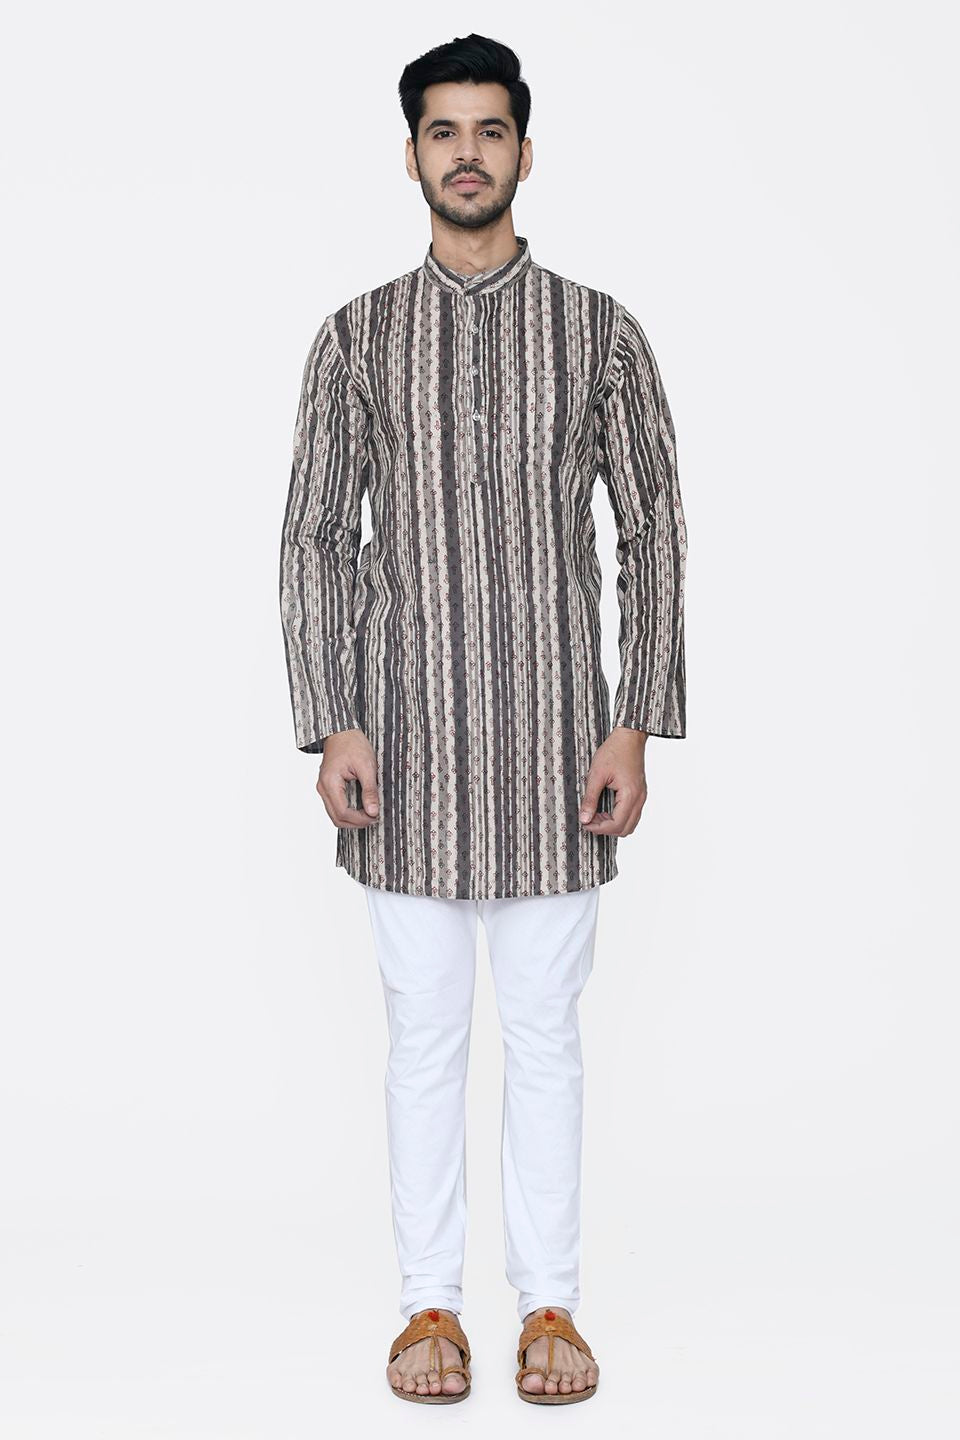 Jaipur 100% Cotton Brown Long Kurta Pajama